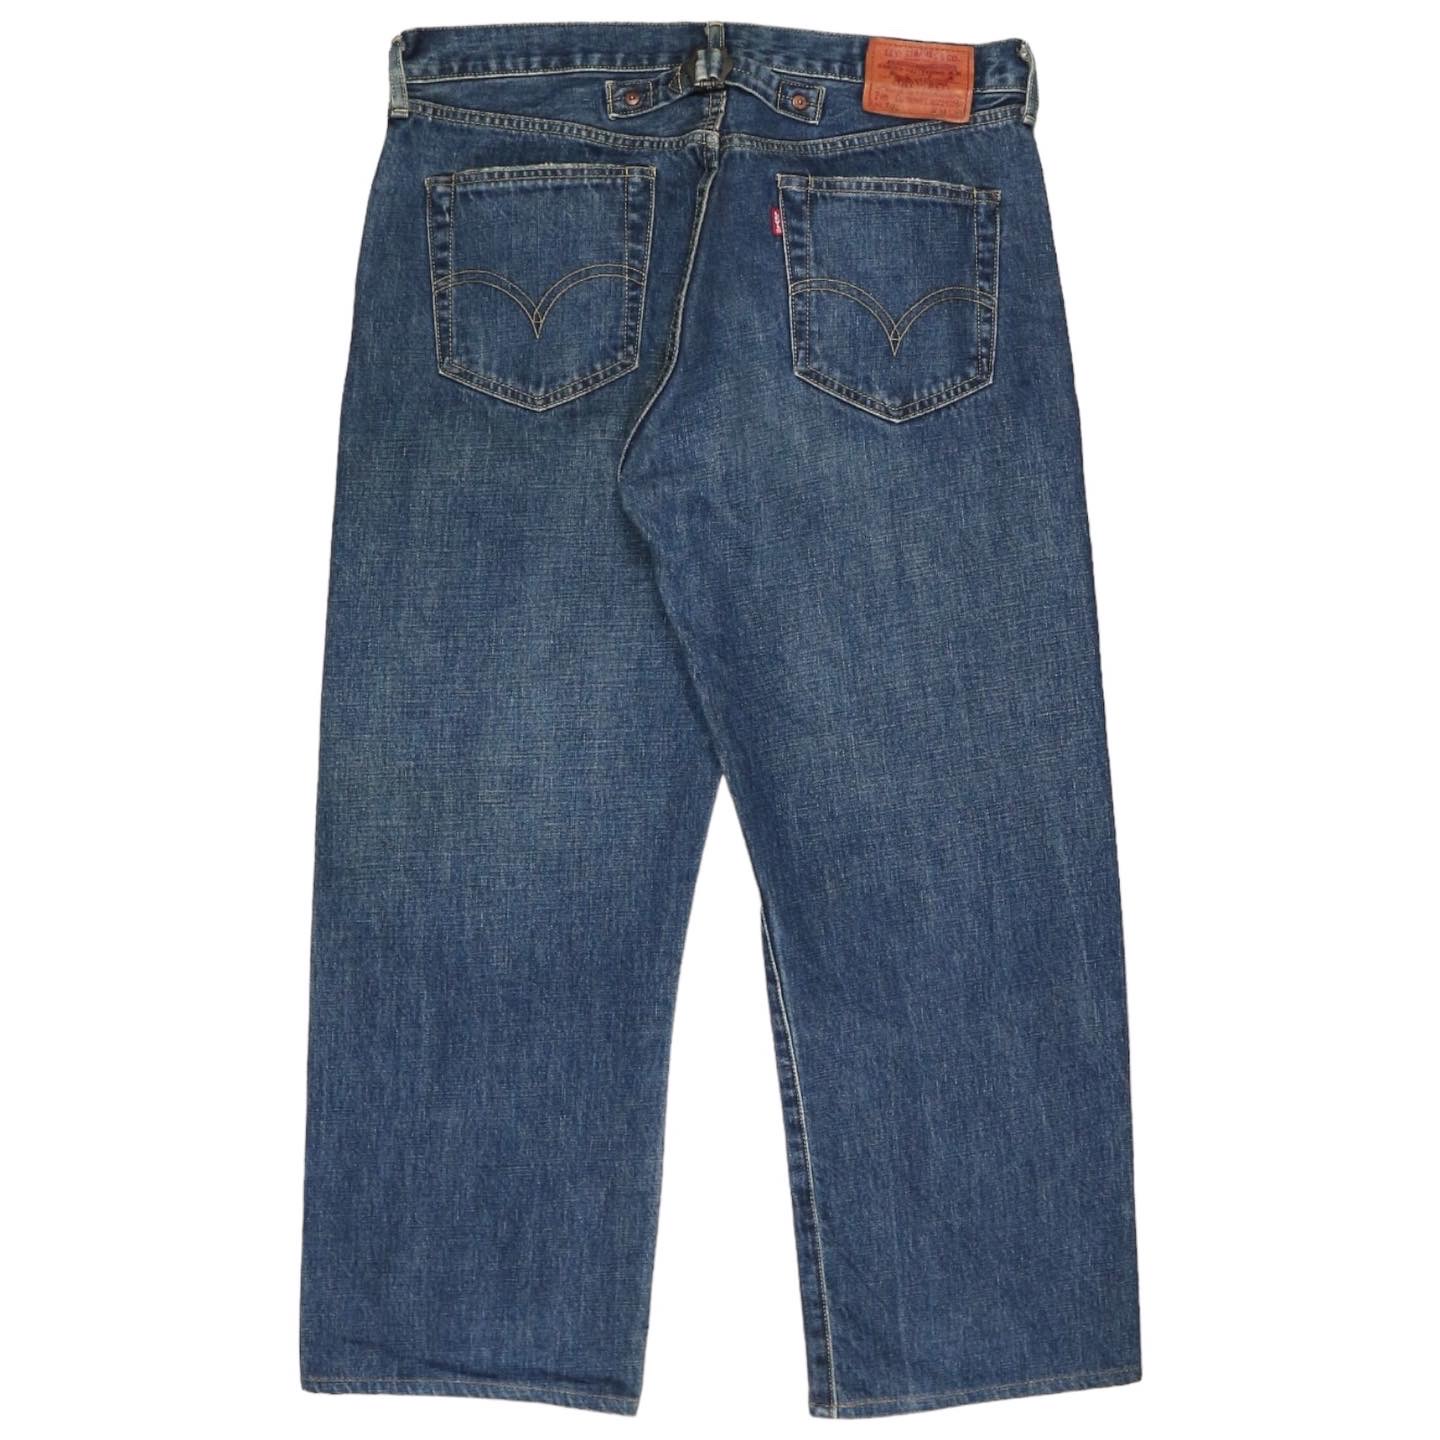 90s Levi's 702 Selvedge Denim Jeans Size 34